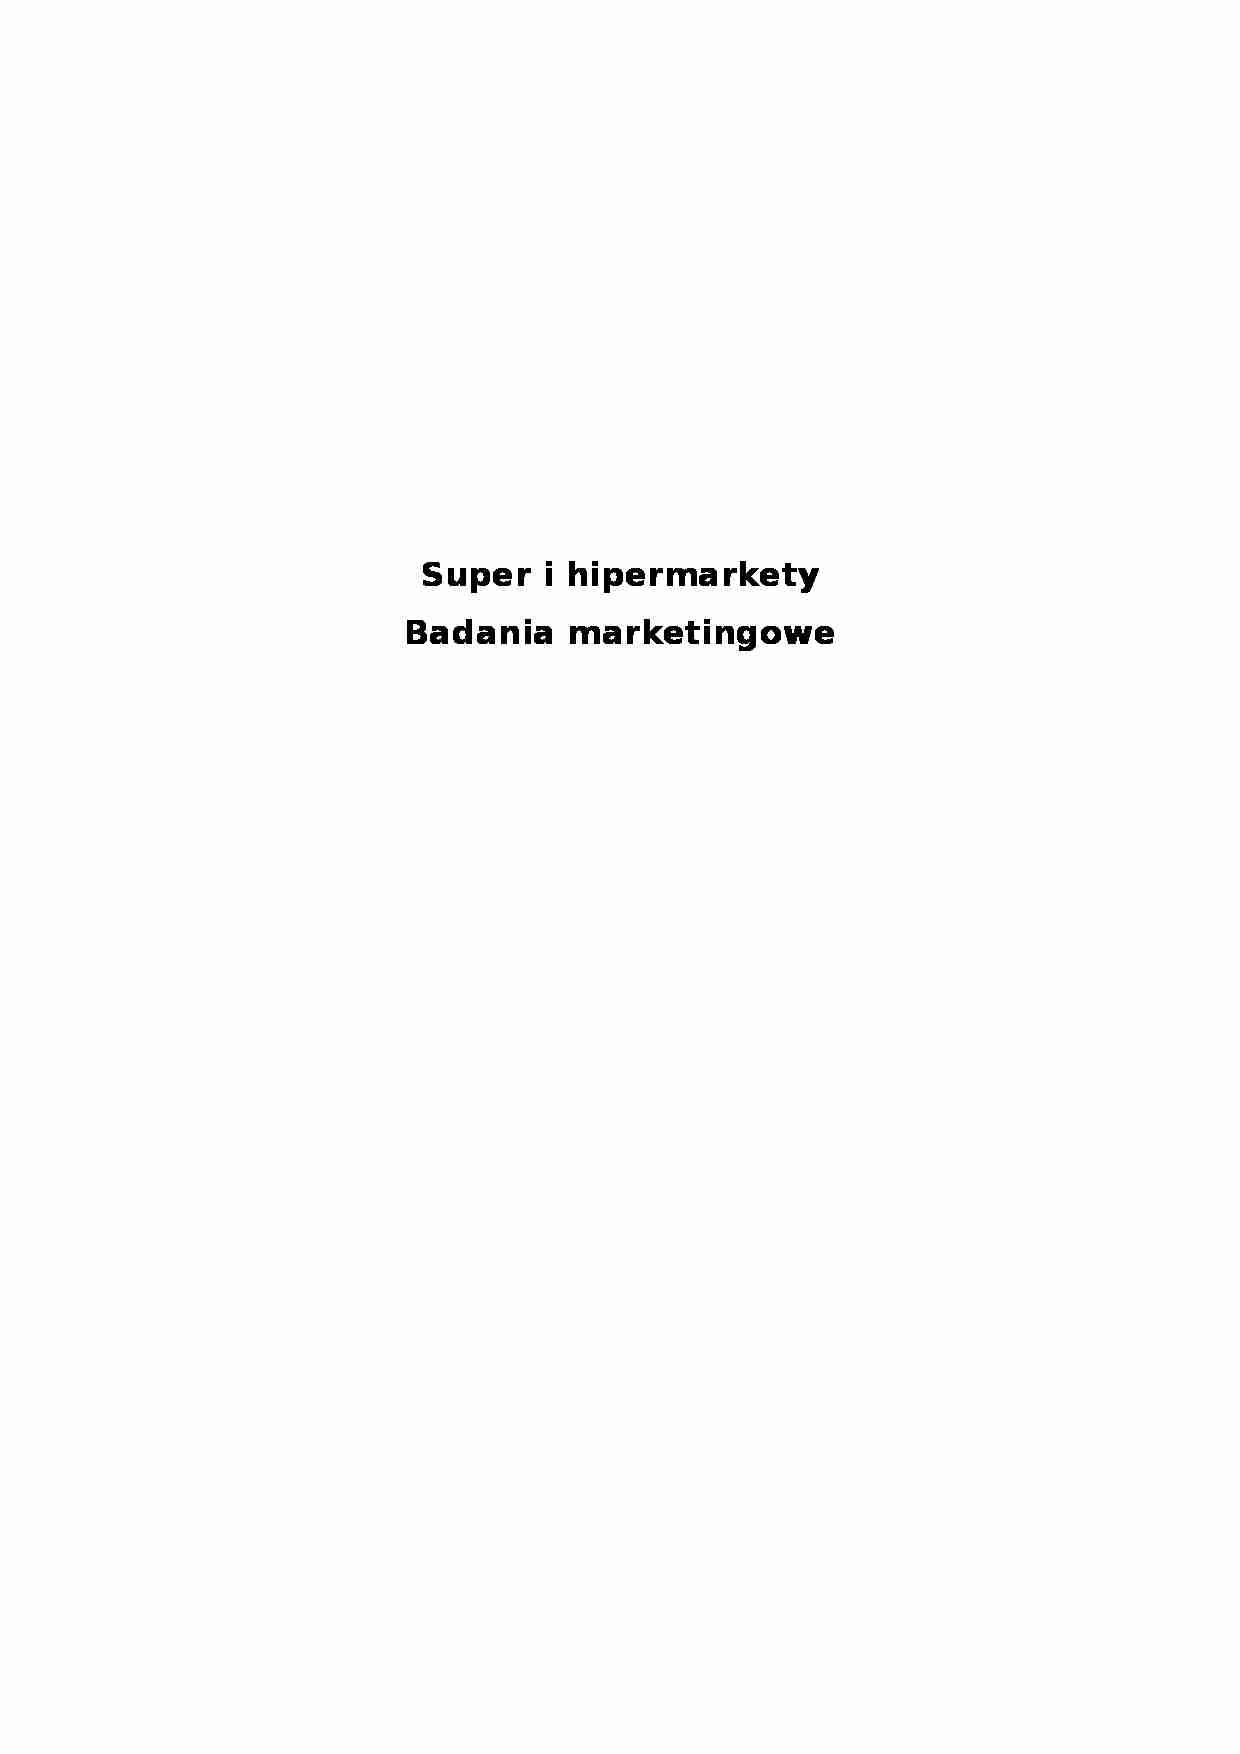 Badania marketingowe - markety - Hipermarket - strona 1